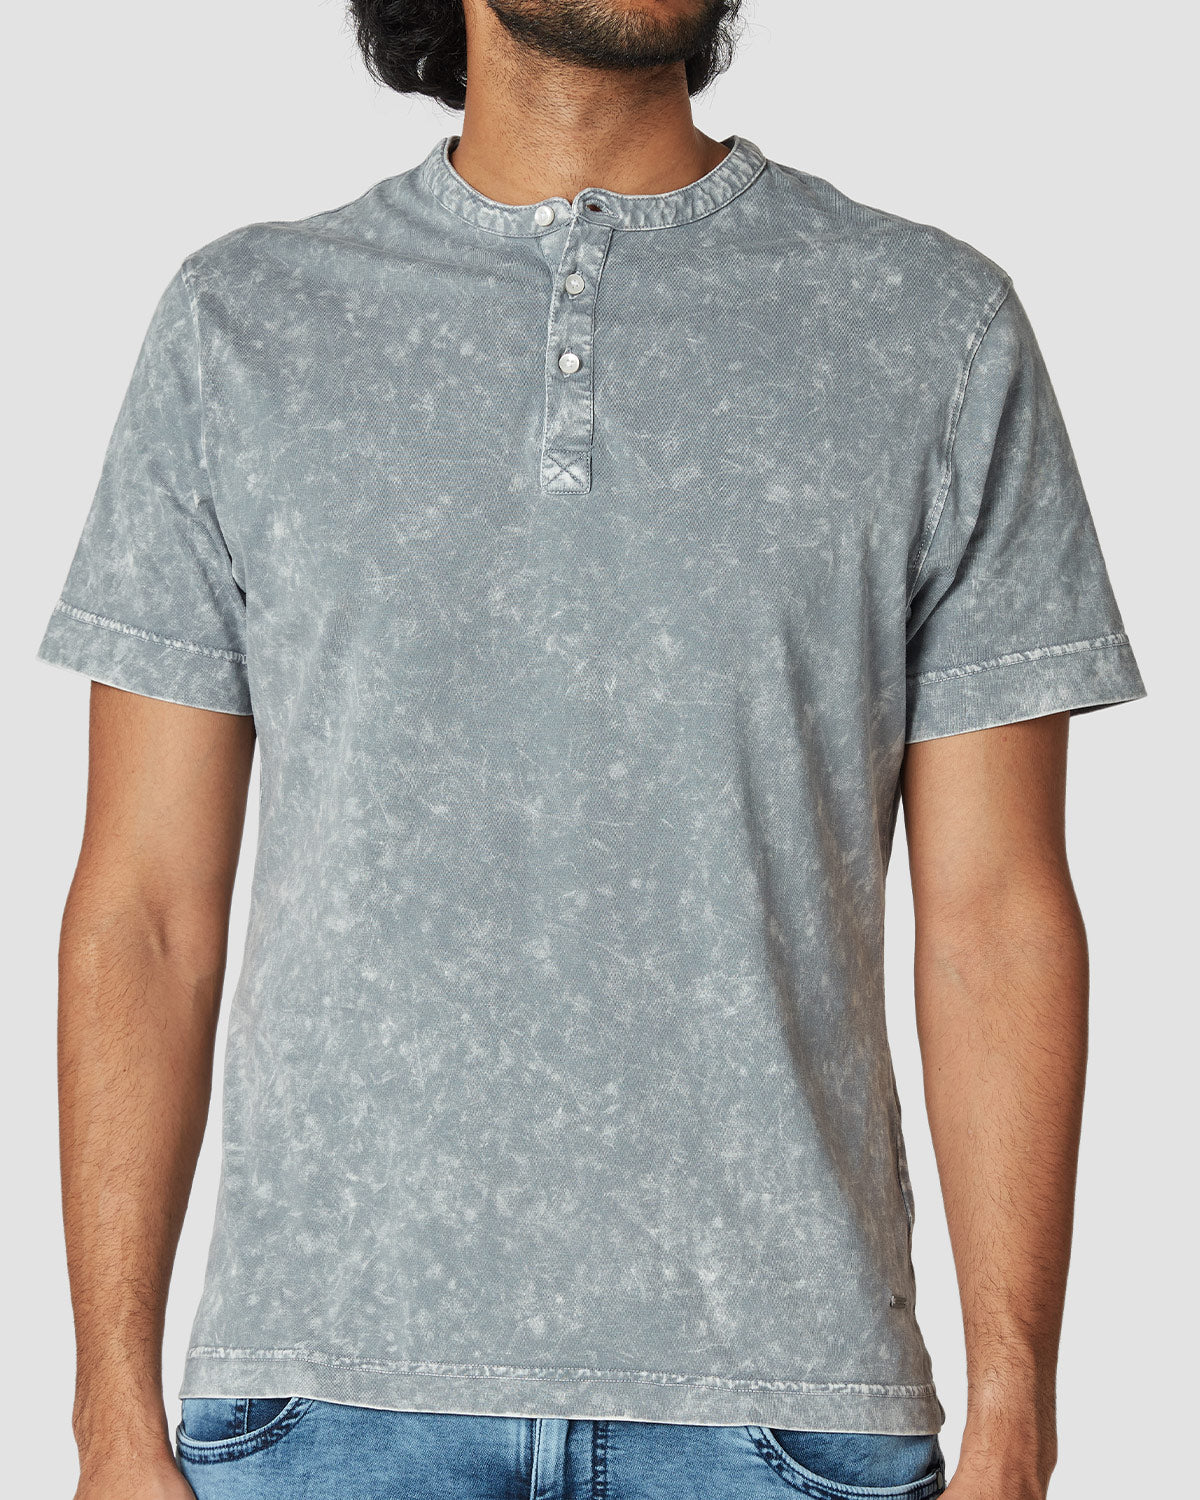 Distressed Spotwash Henley T-Shirt - Grey